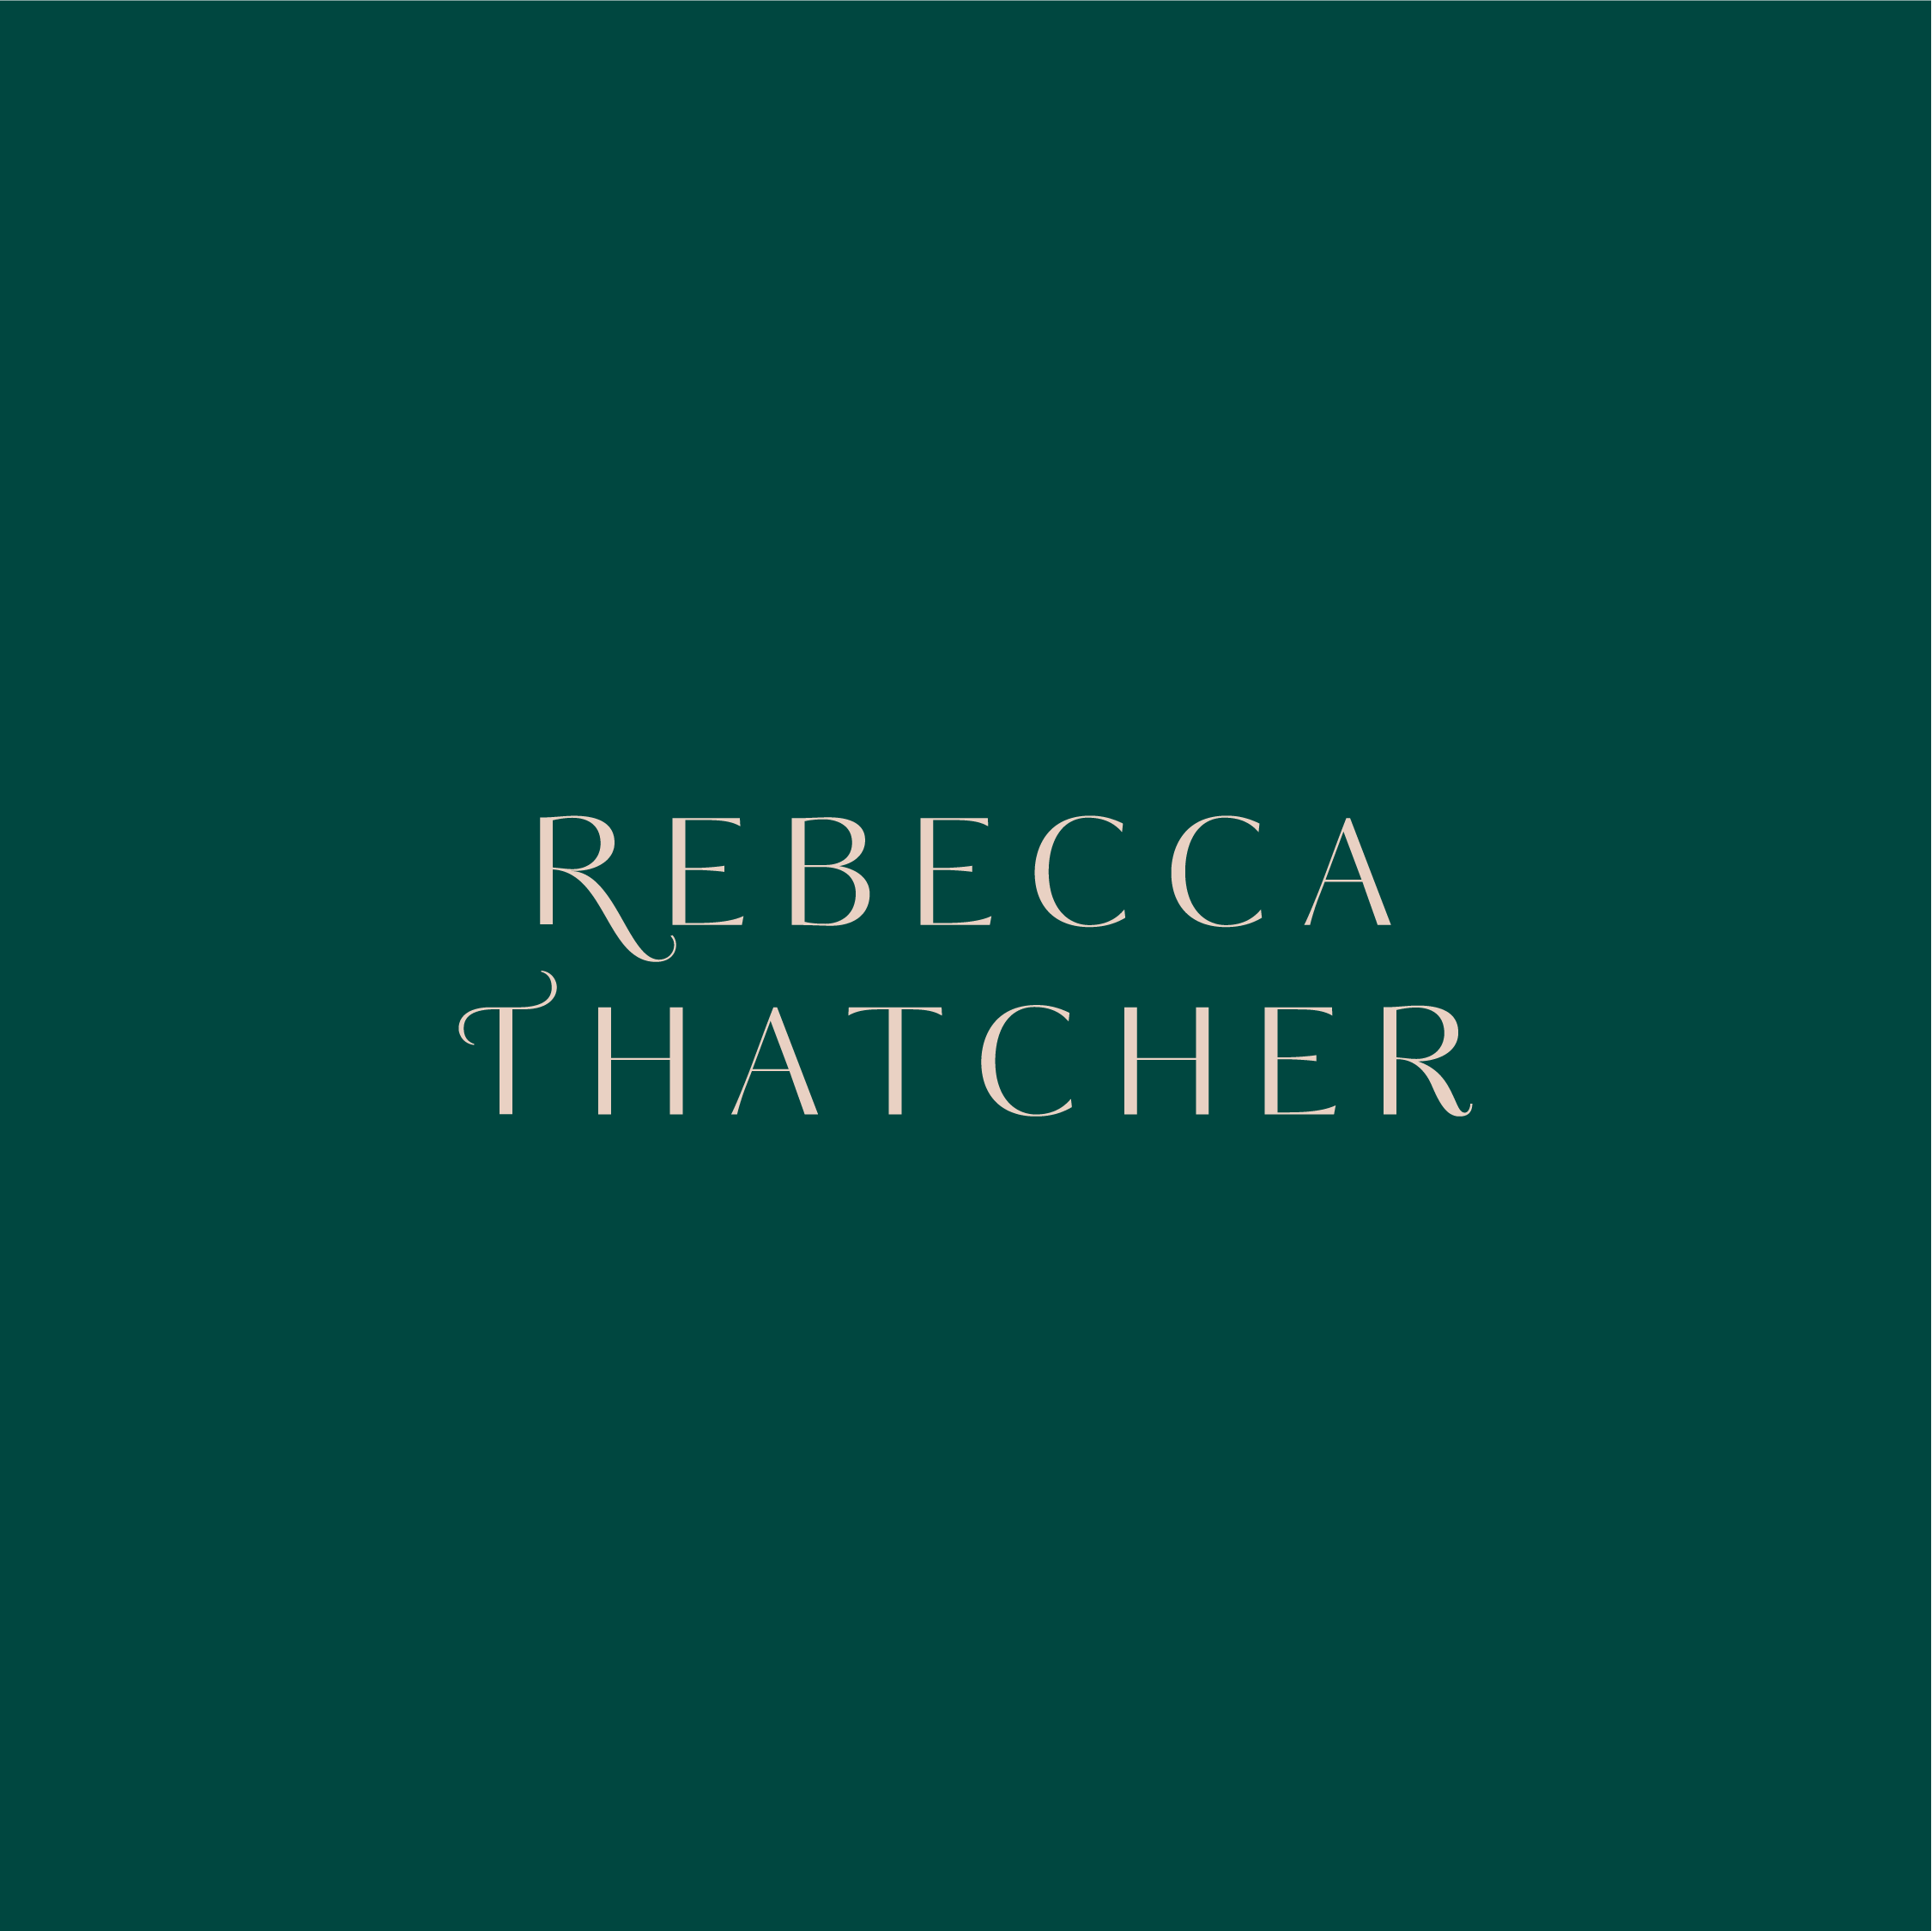 Custom logo design for Rebecca Thatcher, a Facebook Ads Strategist based in the UK.